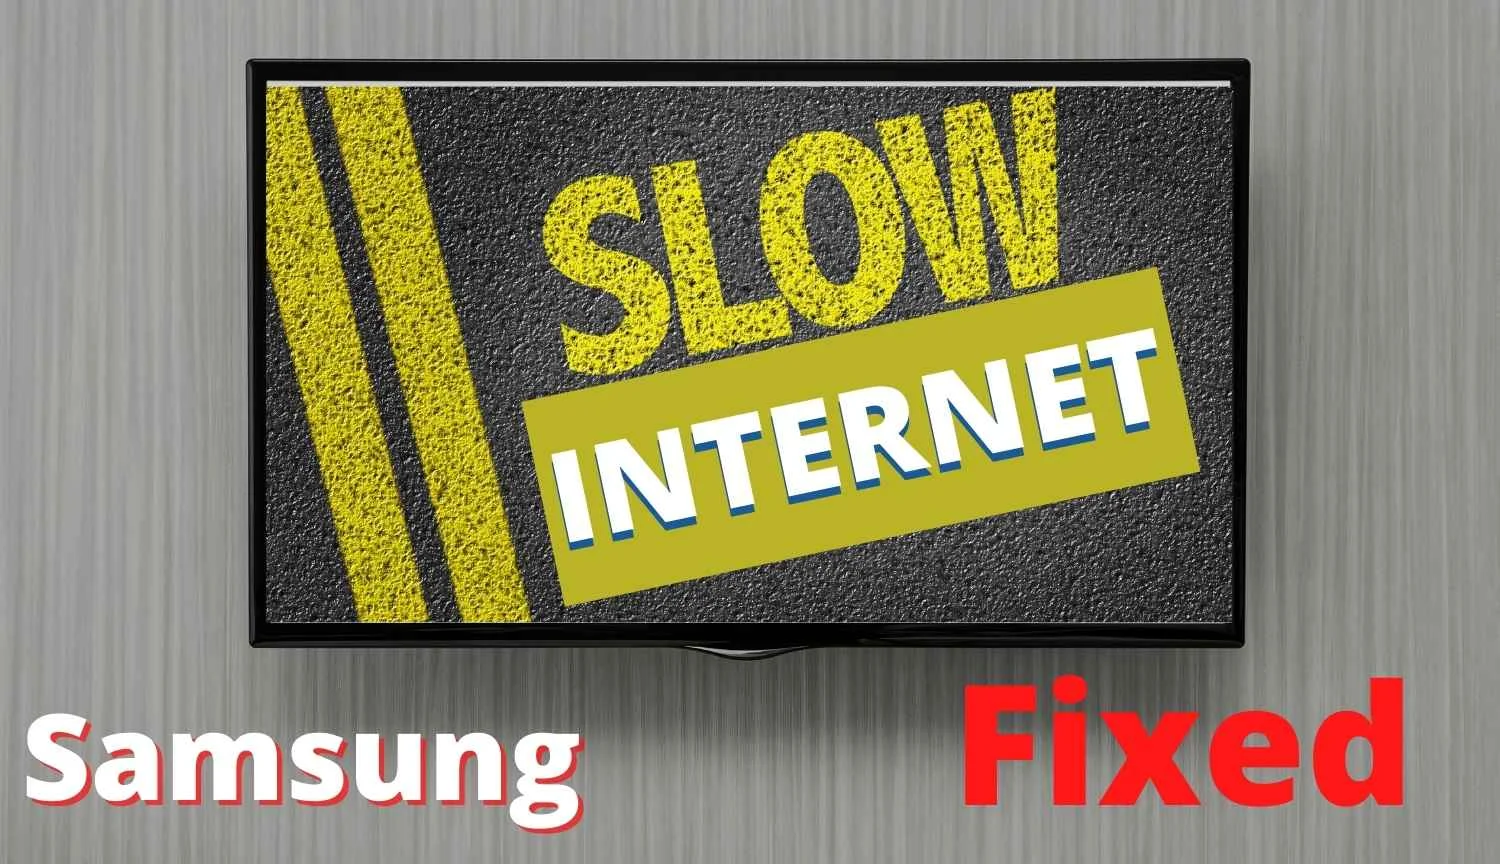 Samsung Tv Slow Internet Fixed – Easy Way